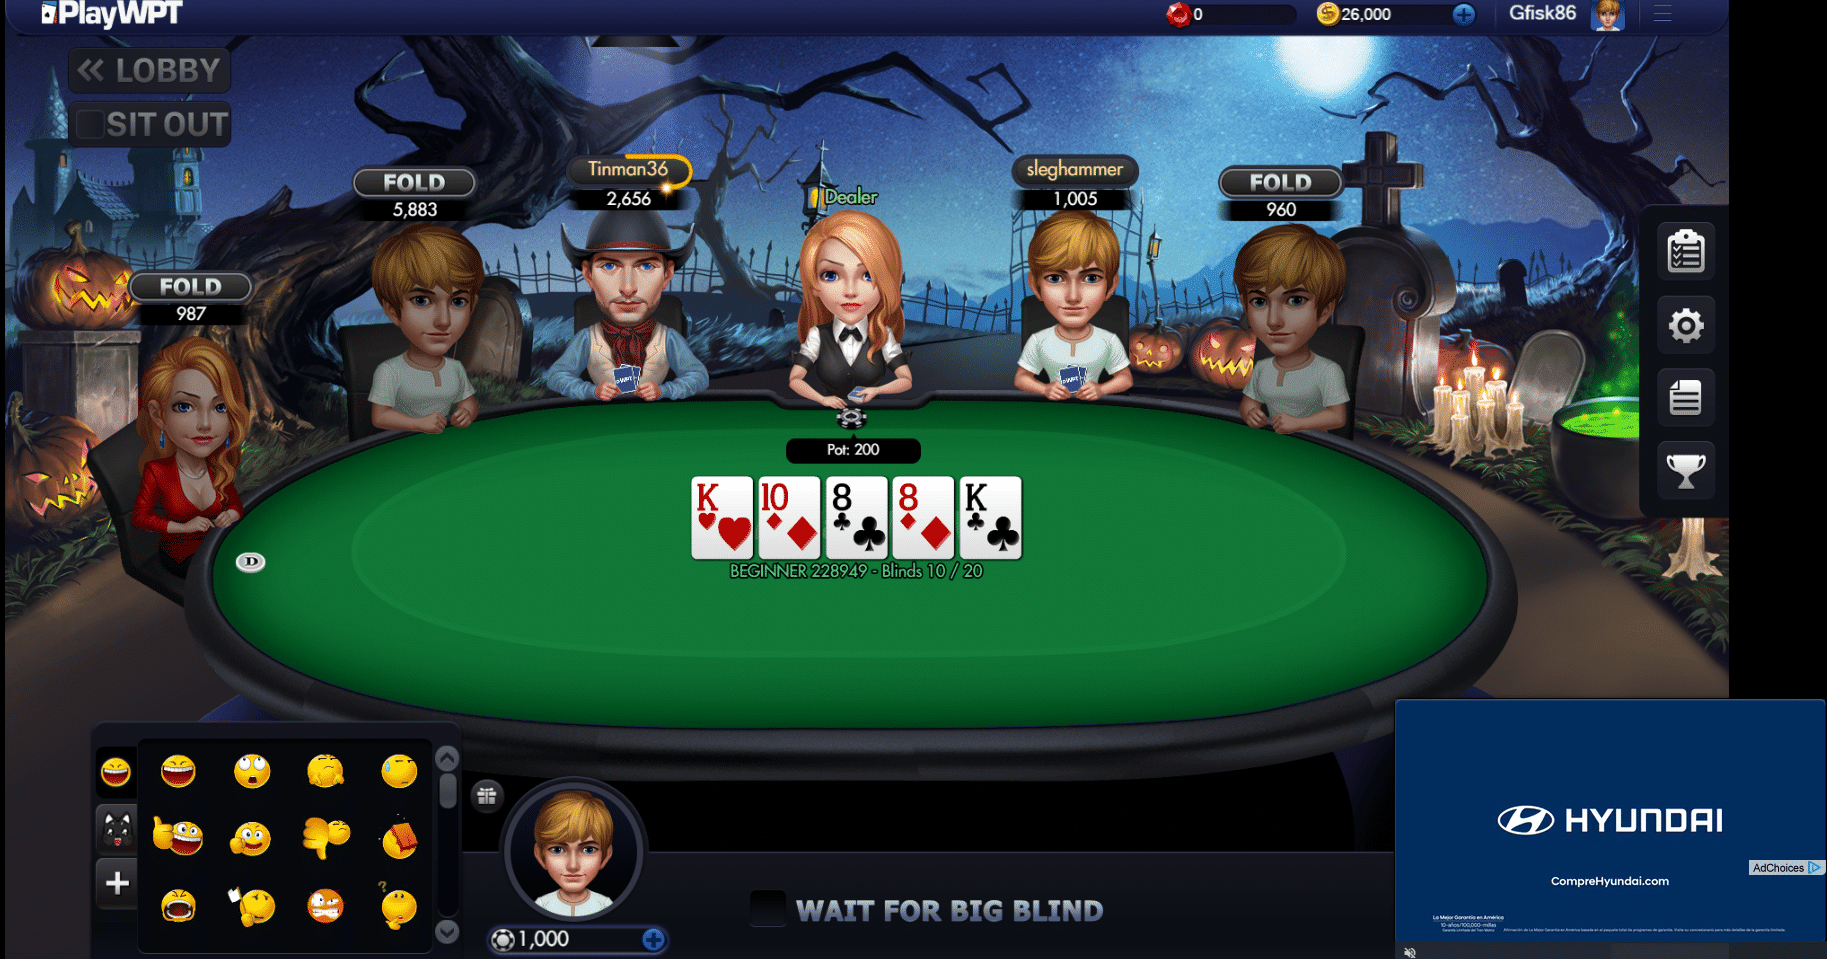 Best Sites To Play Poker Online For Money Uk Slot Action Slotvault Com Gambling